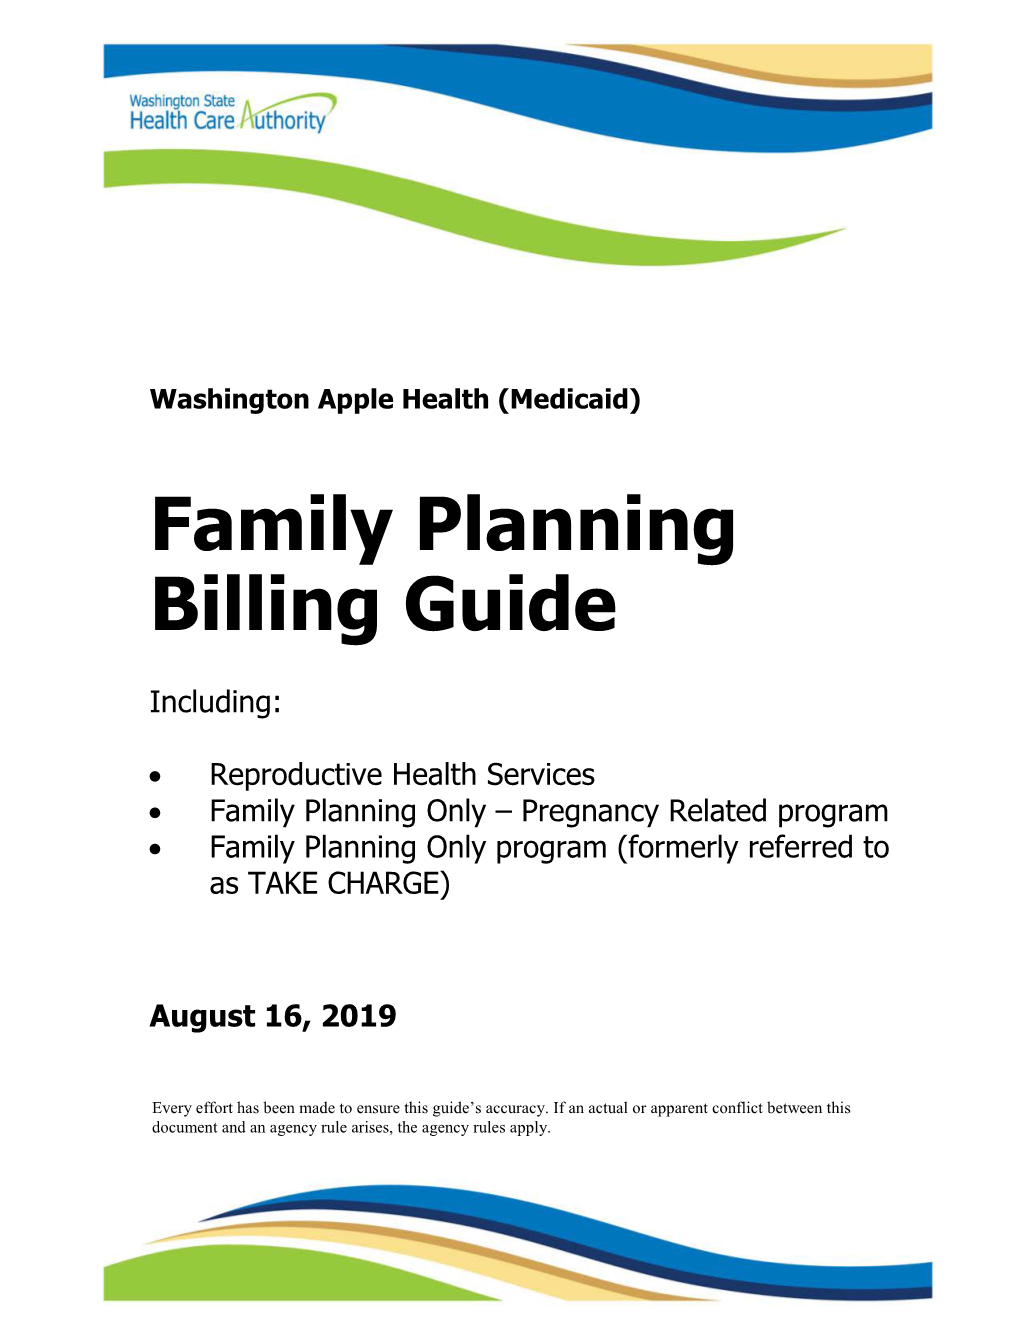 Family Planning Billing Guide